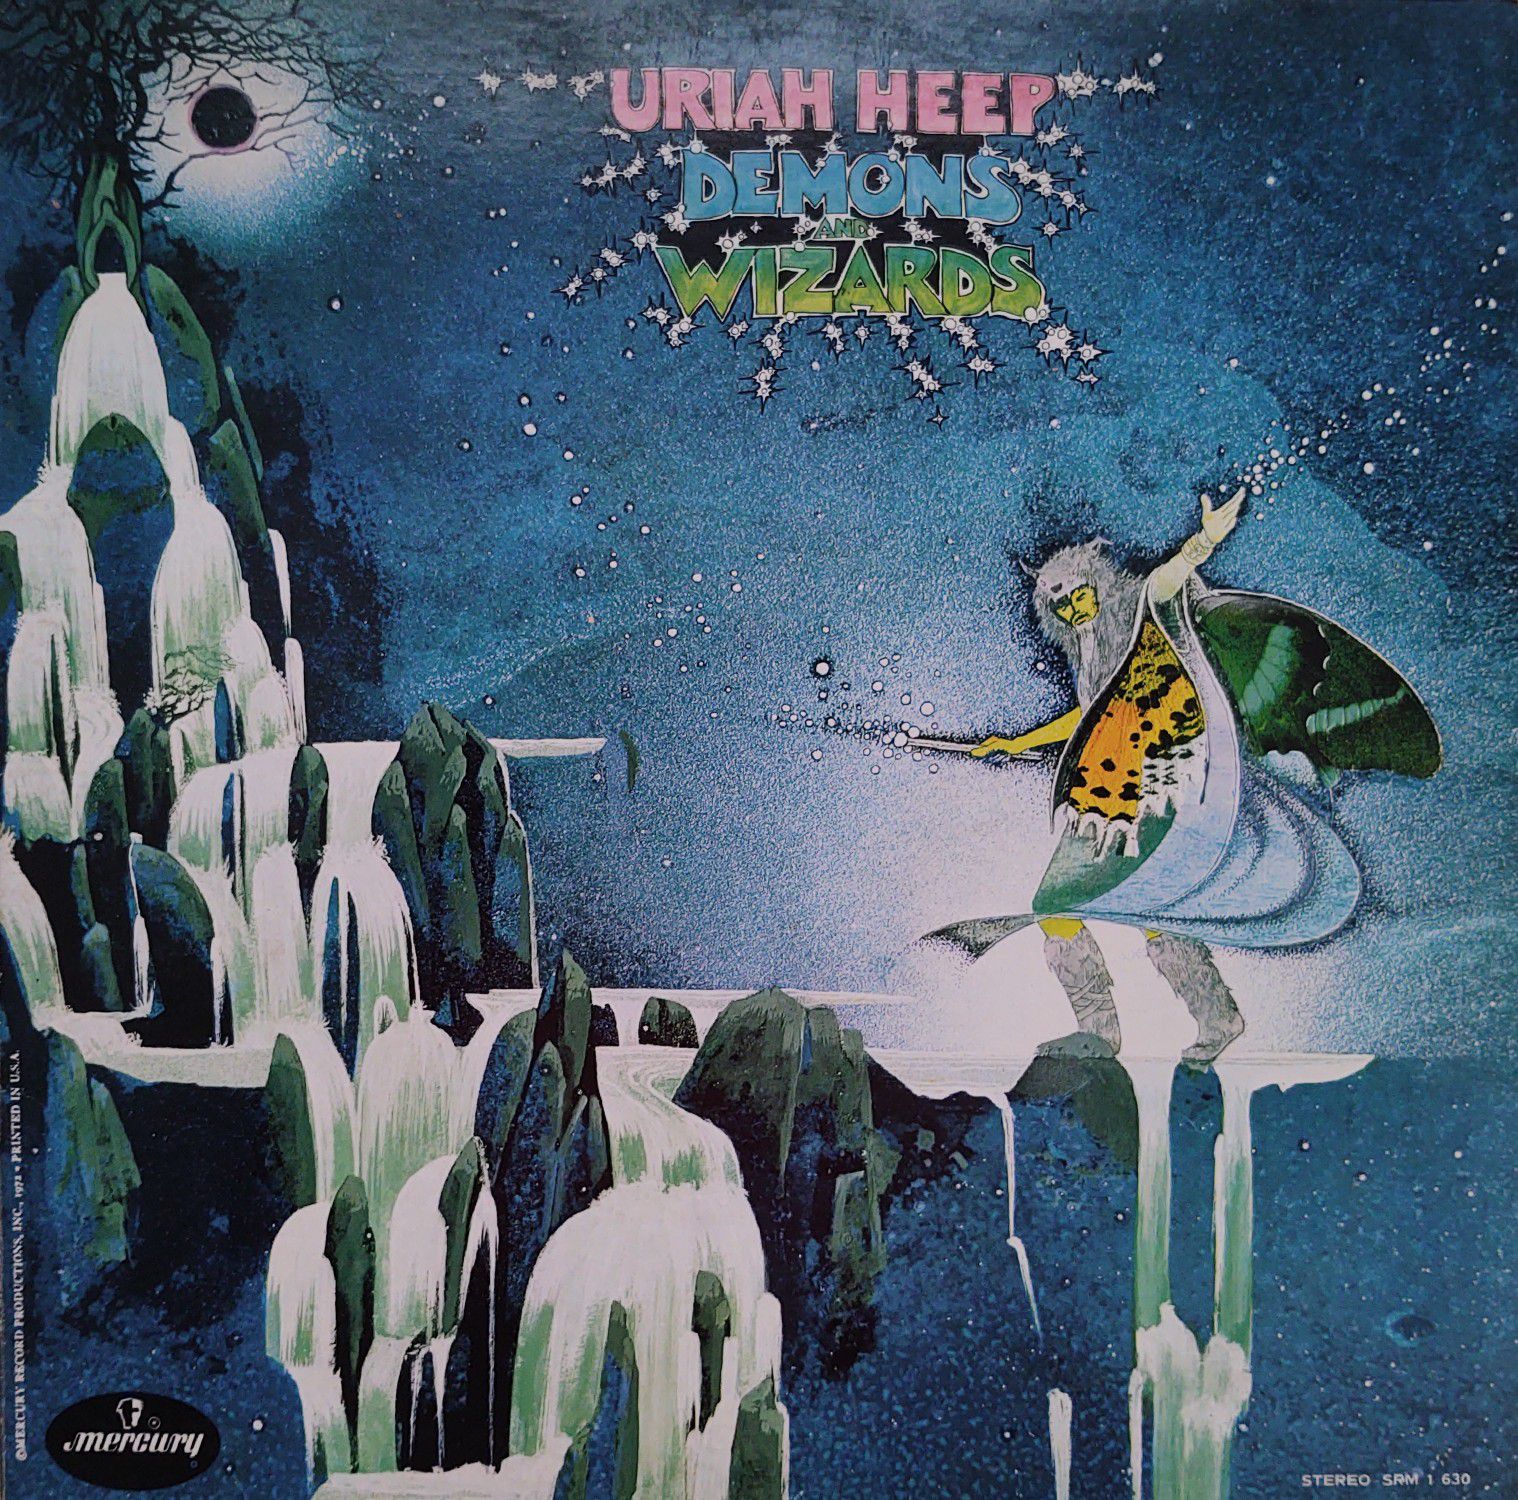 Uriah Heep Demons and Wizards